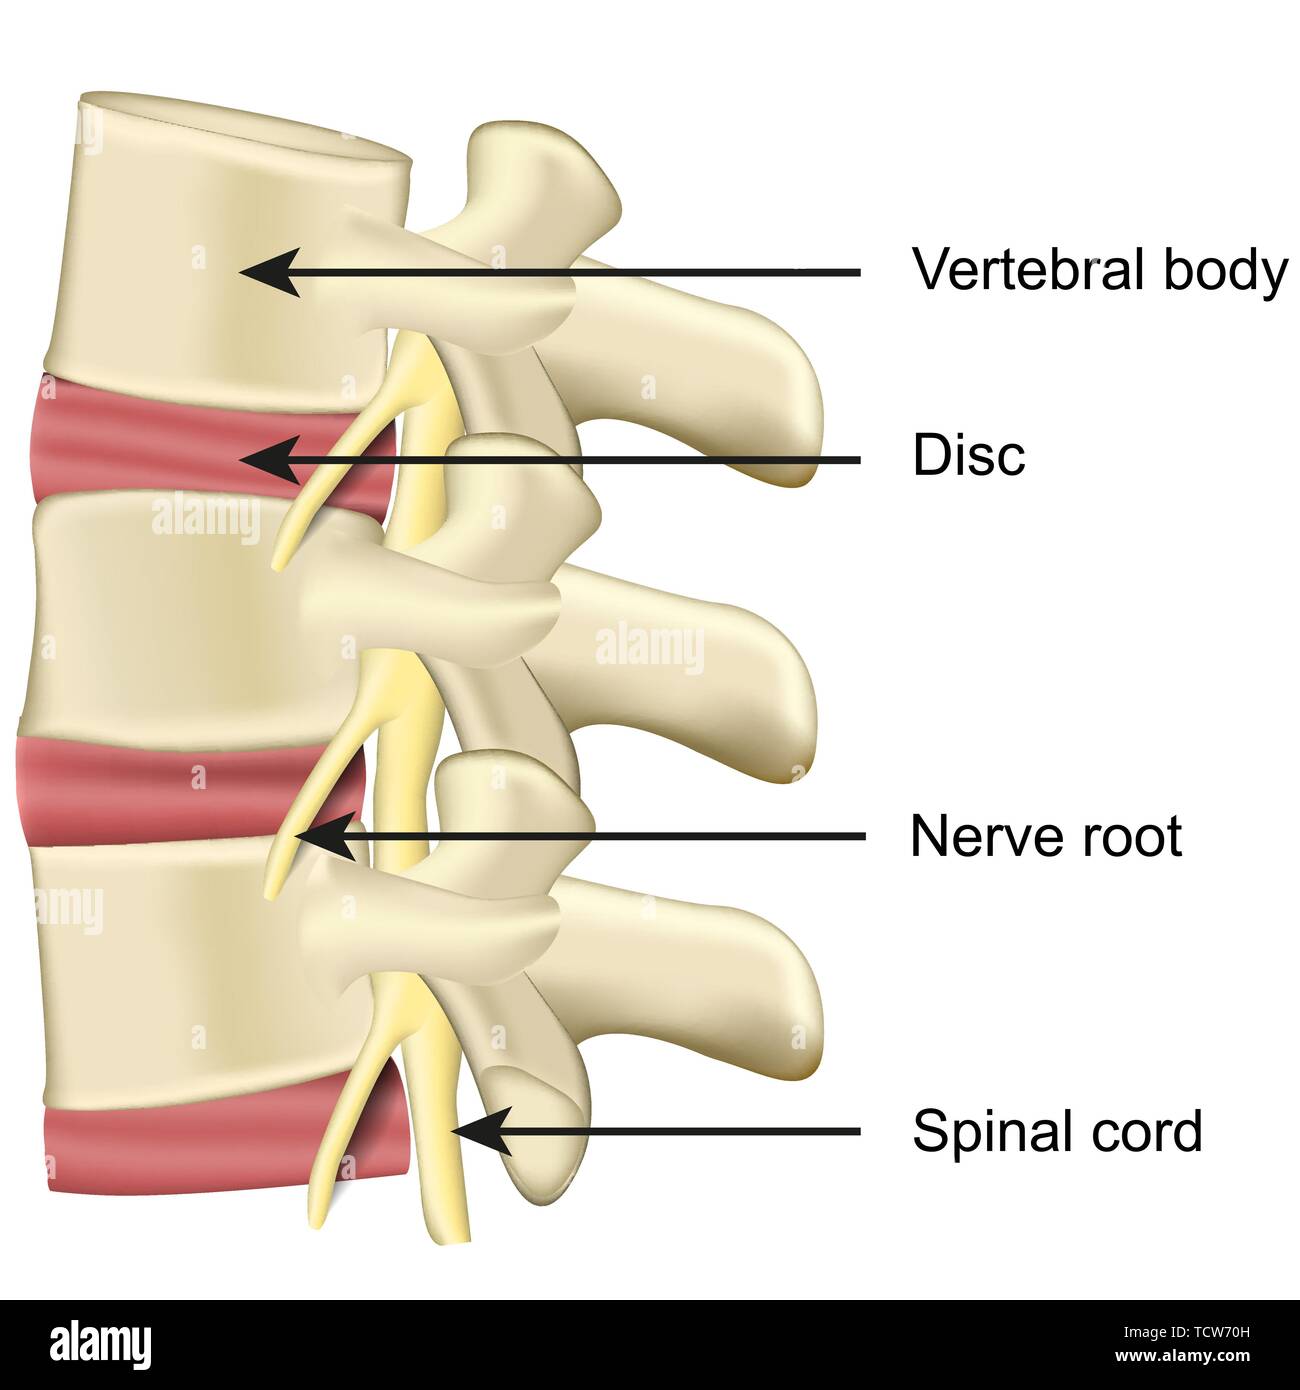 Spine disc and vertebral body anatomy medical vector illustration on white background eps 10 Stock Vector